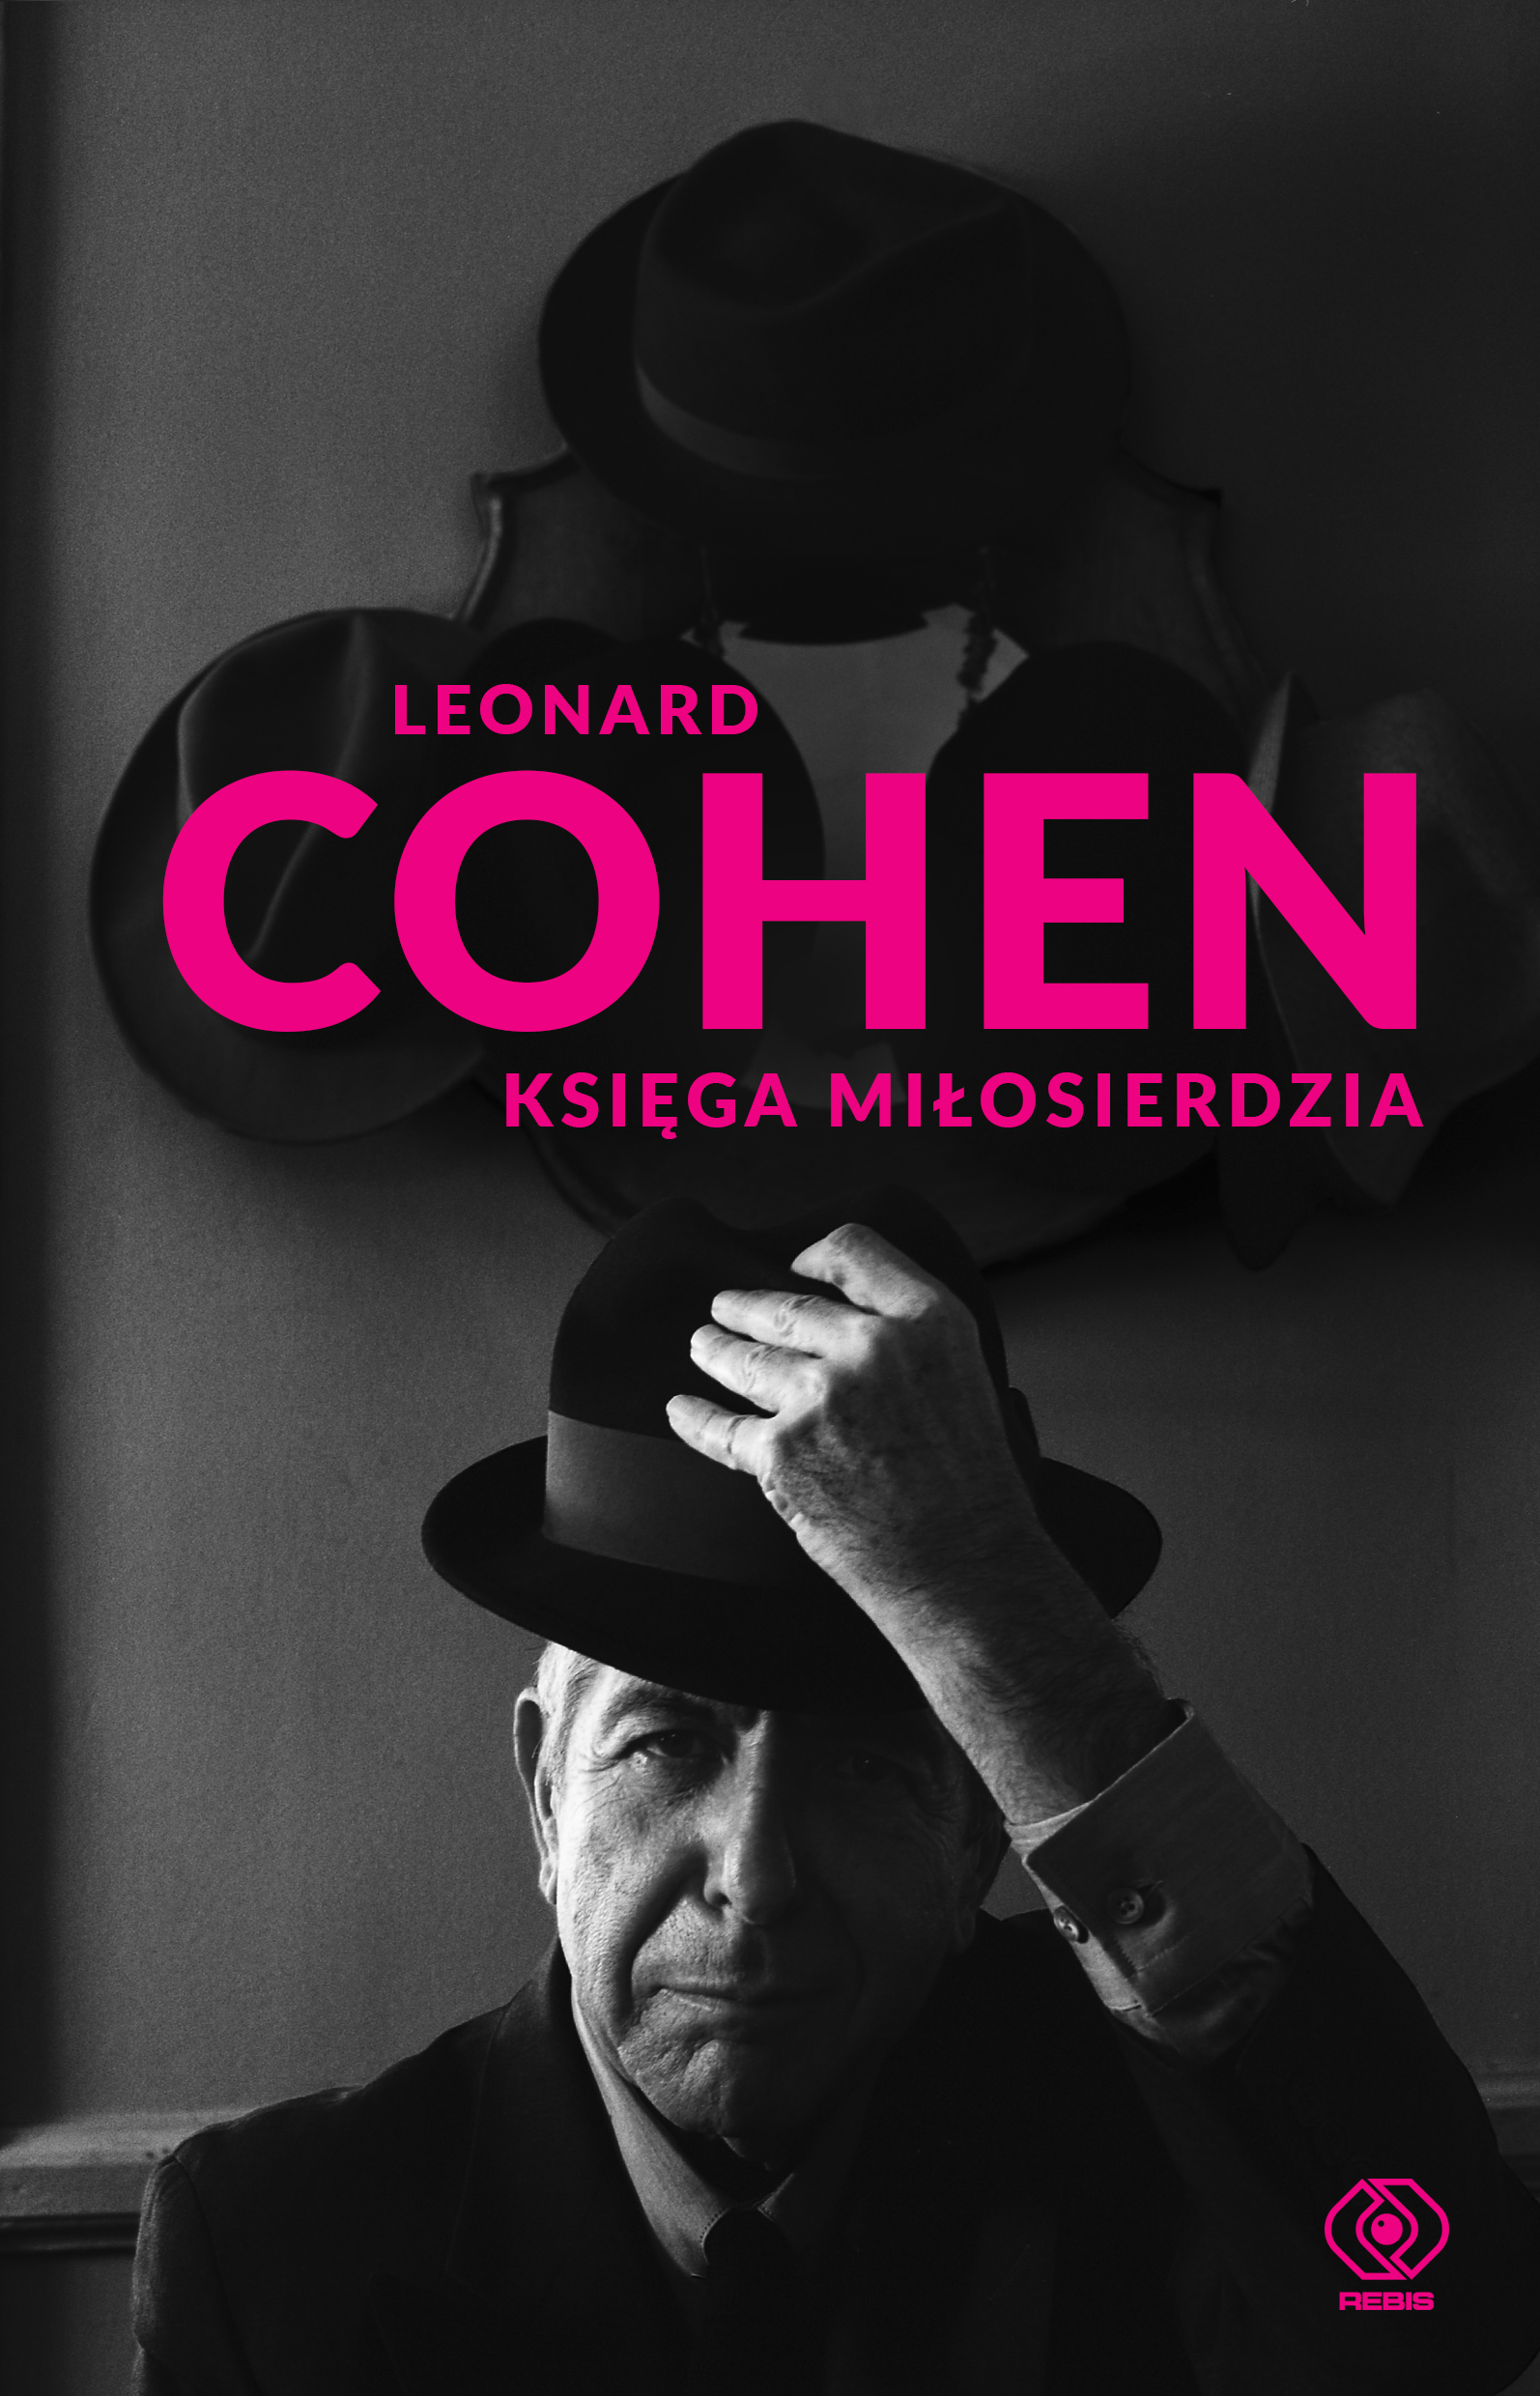 Leonard Cohen, "Księga miłosierdzia"